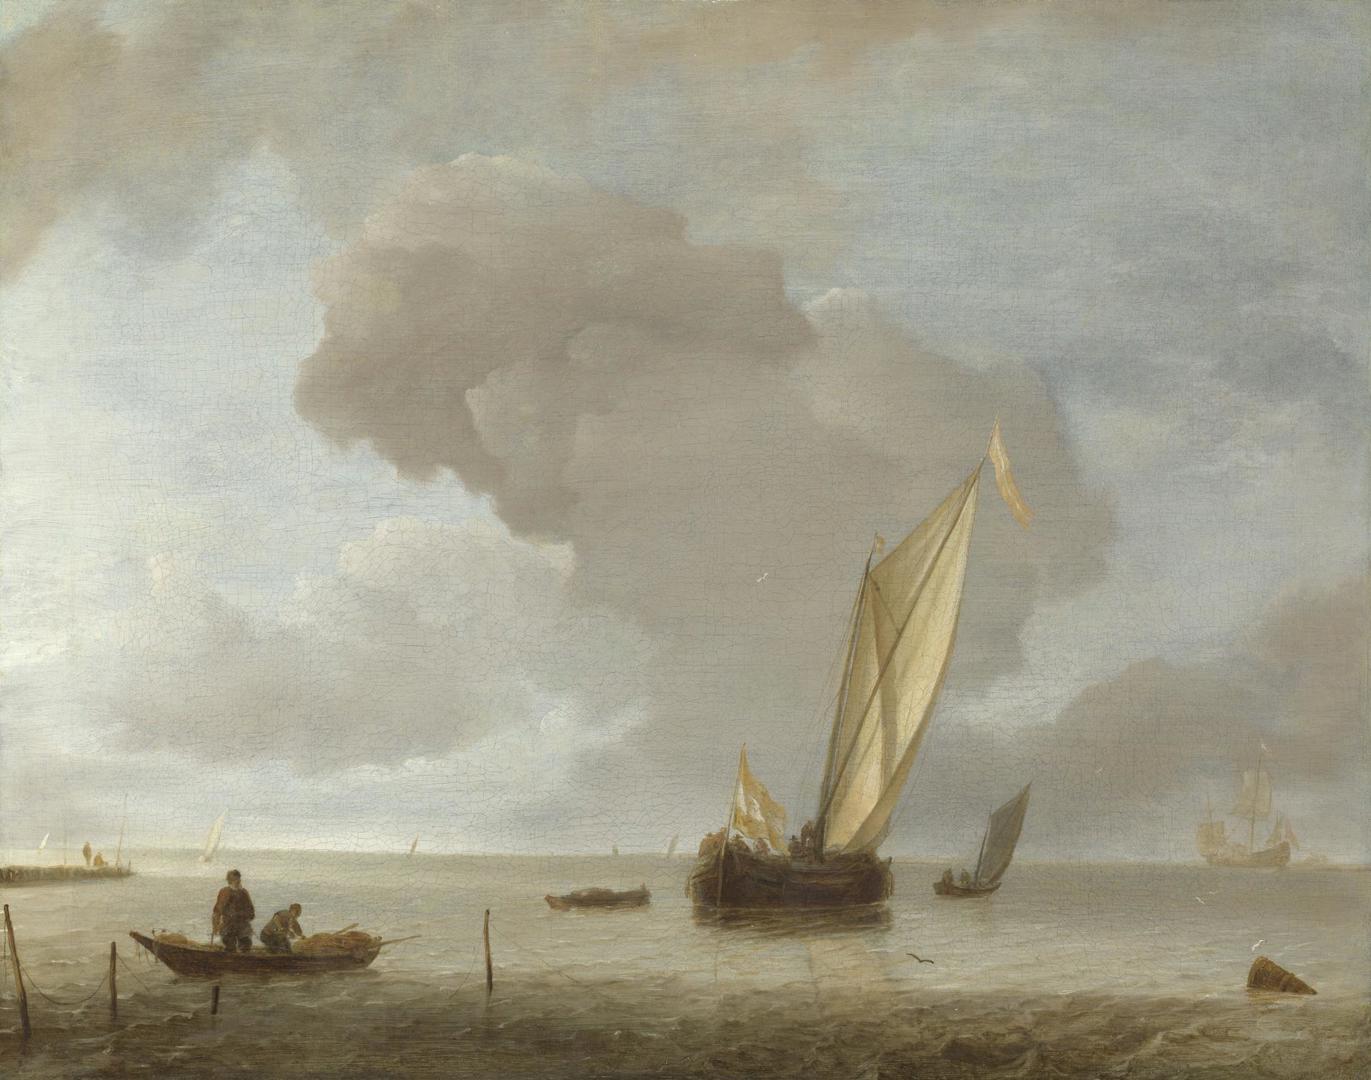 A Small Dutch Vessel before a Light Breeze by Jan van de Cappelle